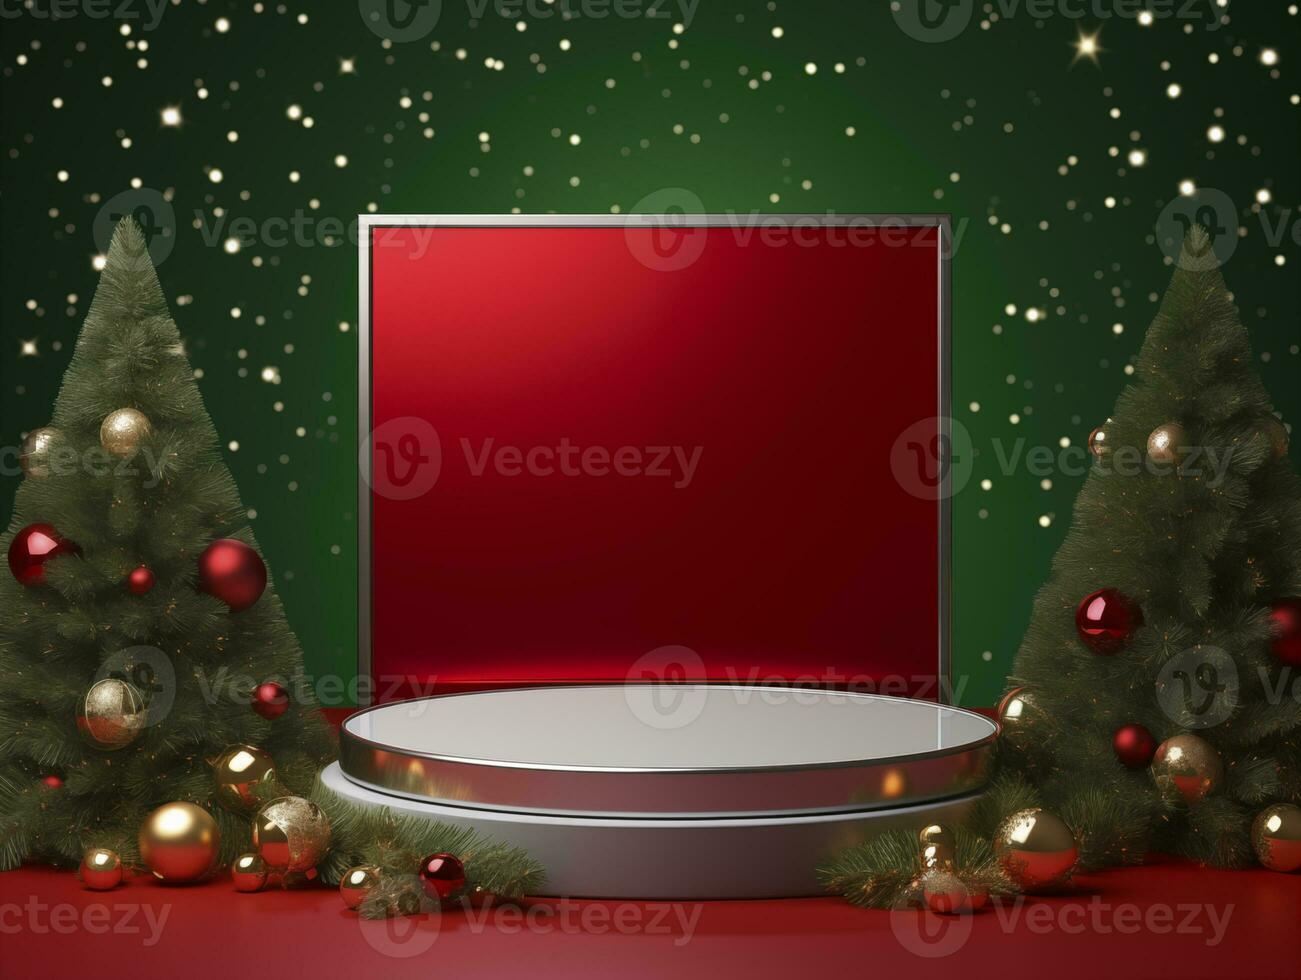 AI generated Christmas Background with a podium mockup photo